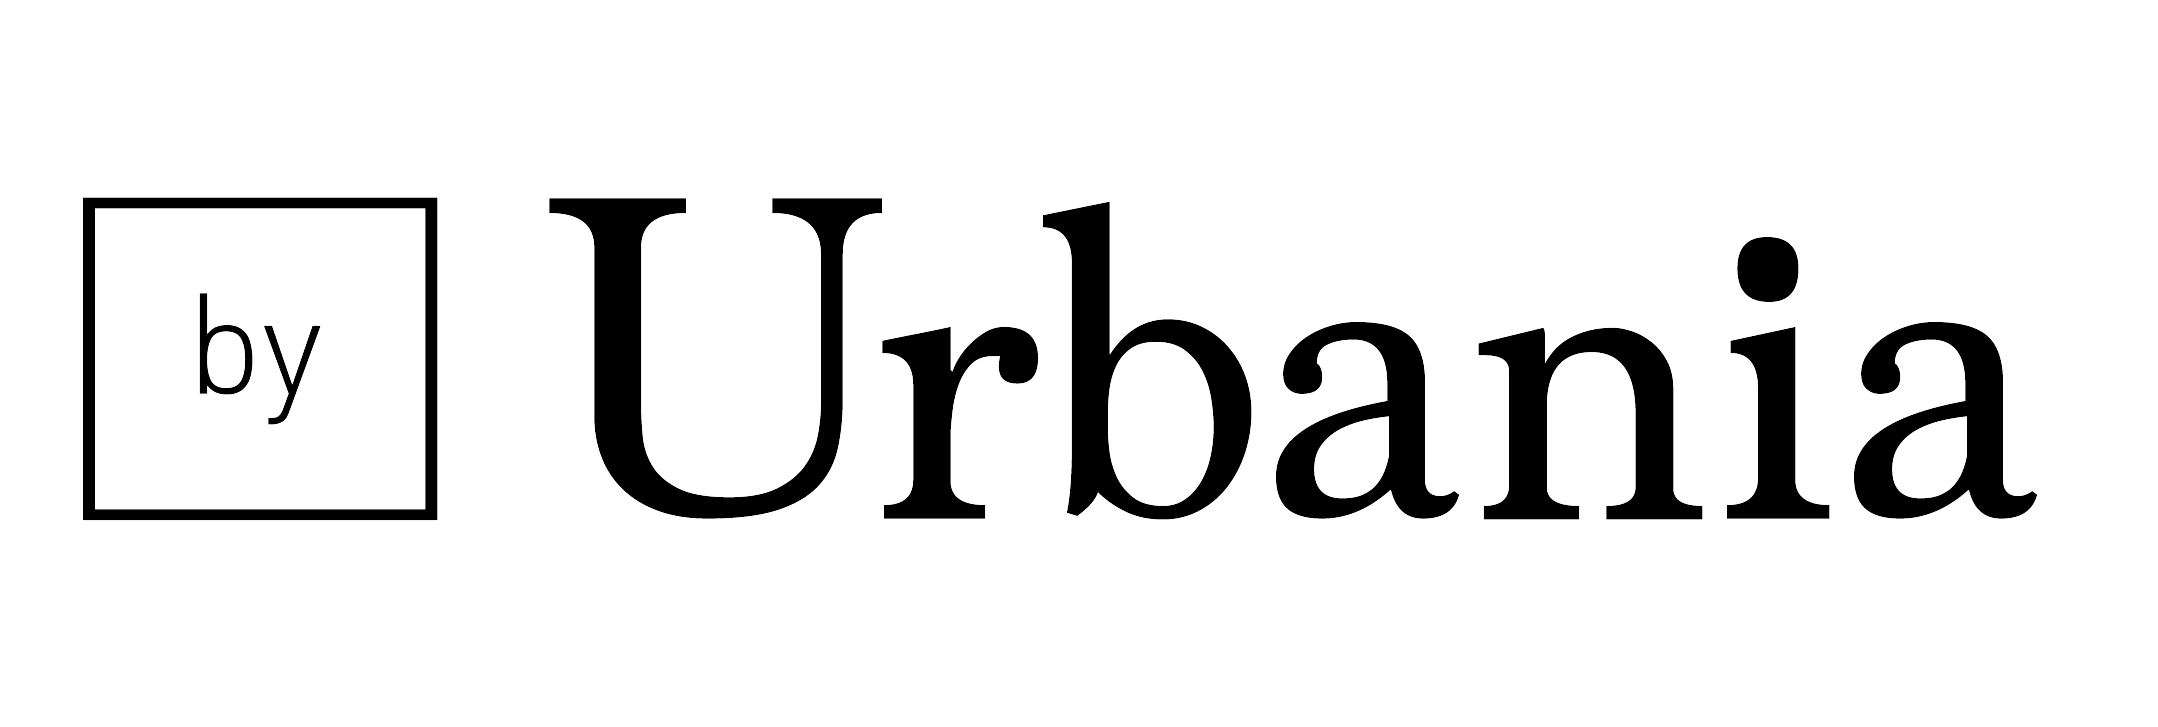 urbania_logo